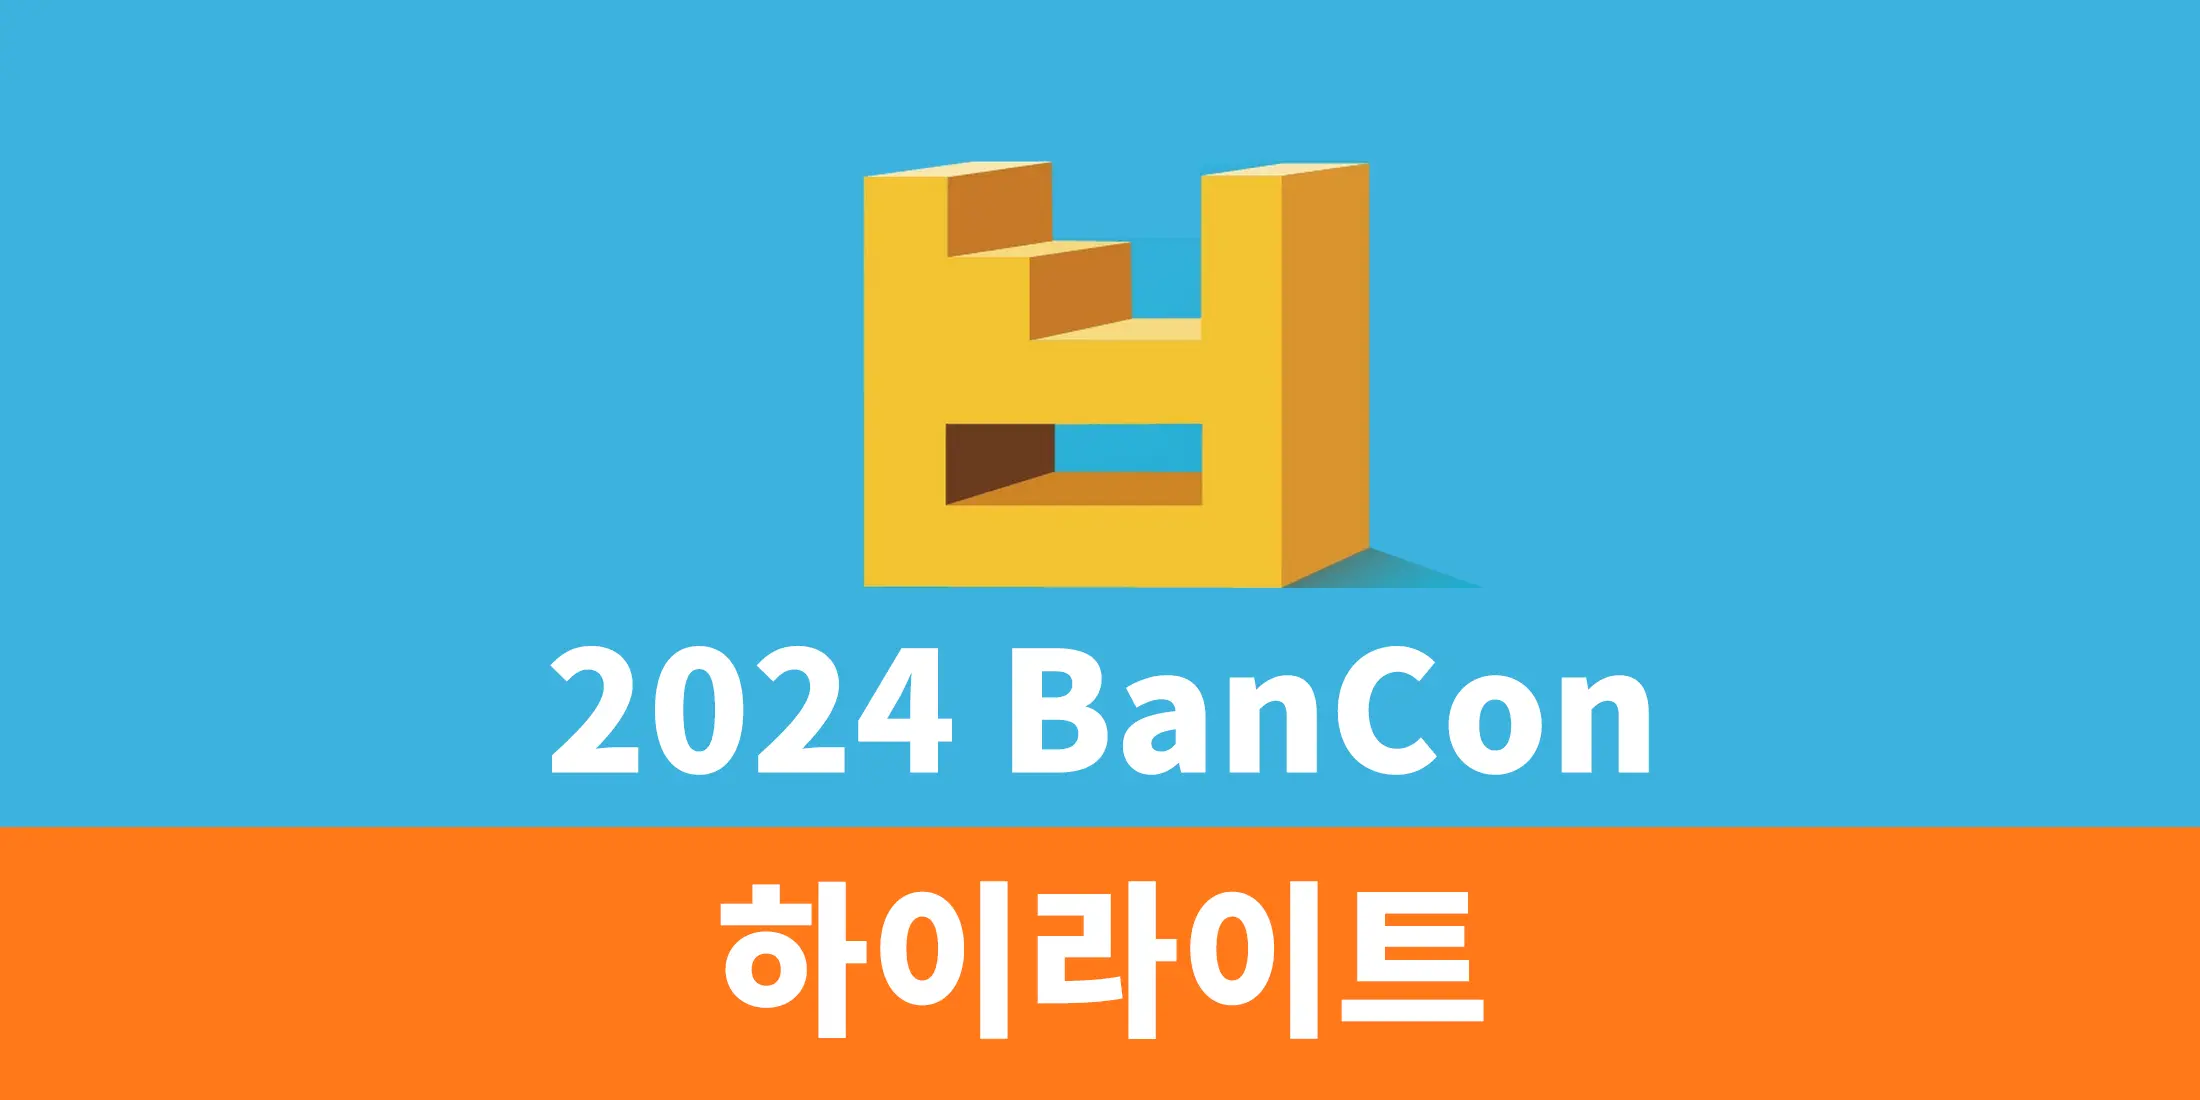 2024 BanCon 하이라이트
2024년 3월 31일 열림